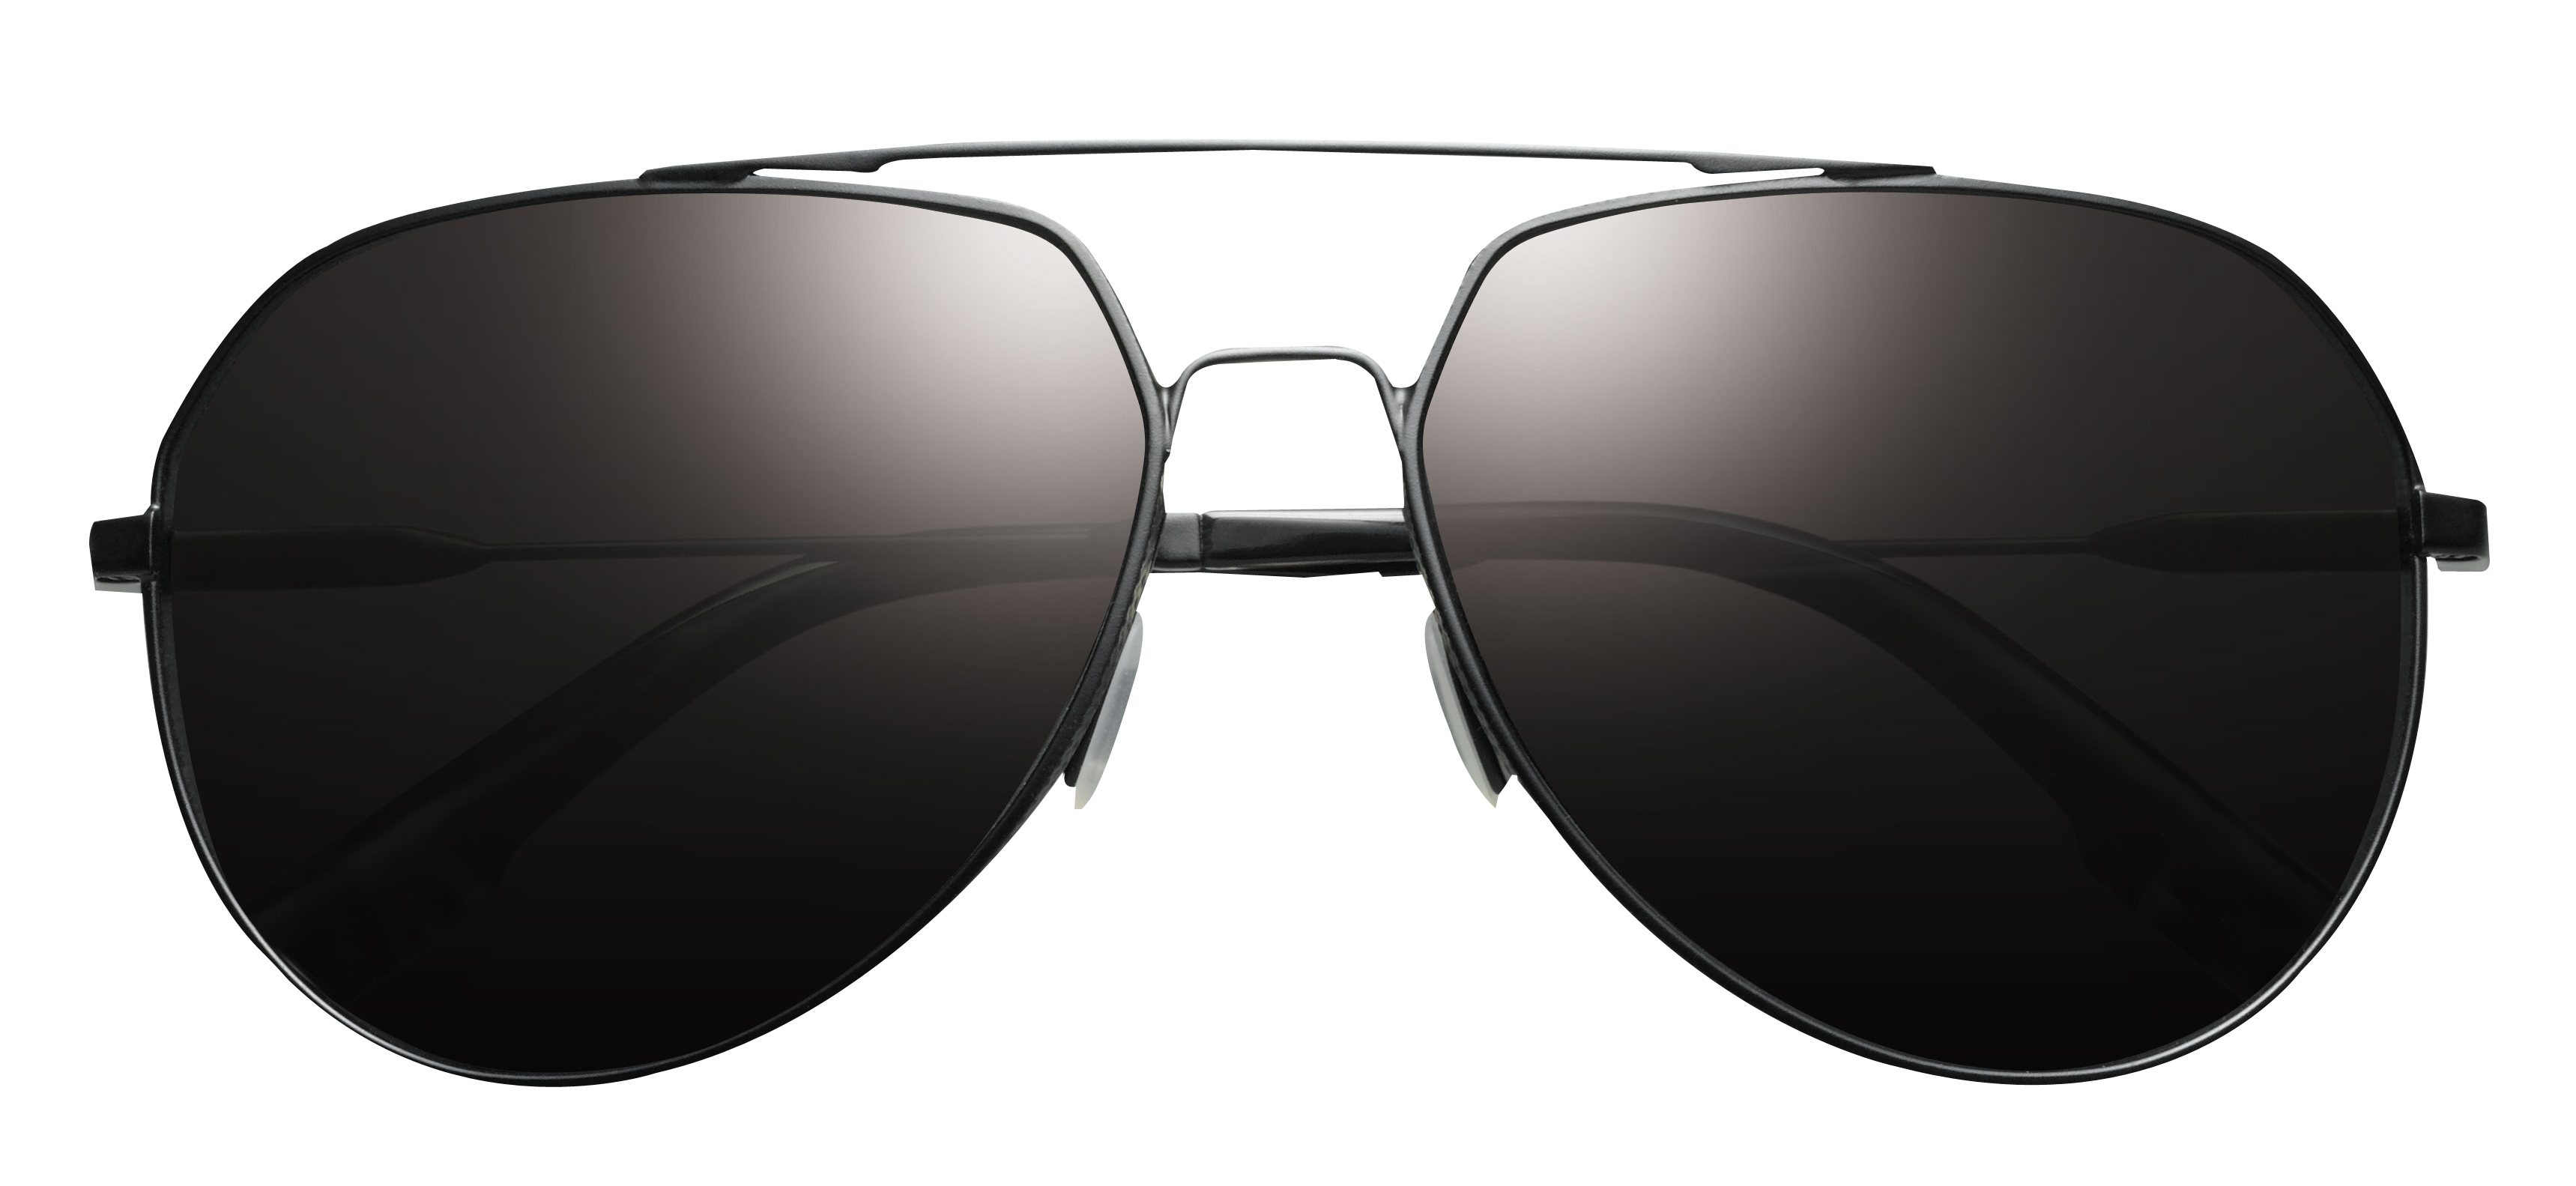 sunglasses png ray ban transparent aviator louisiana bucket brigade #10687